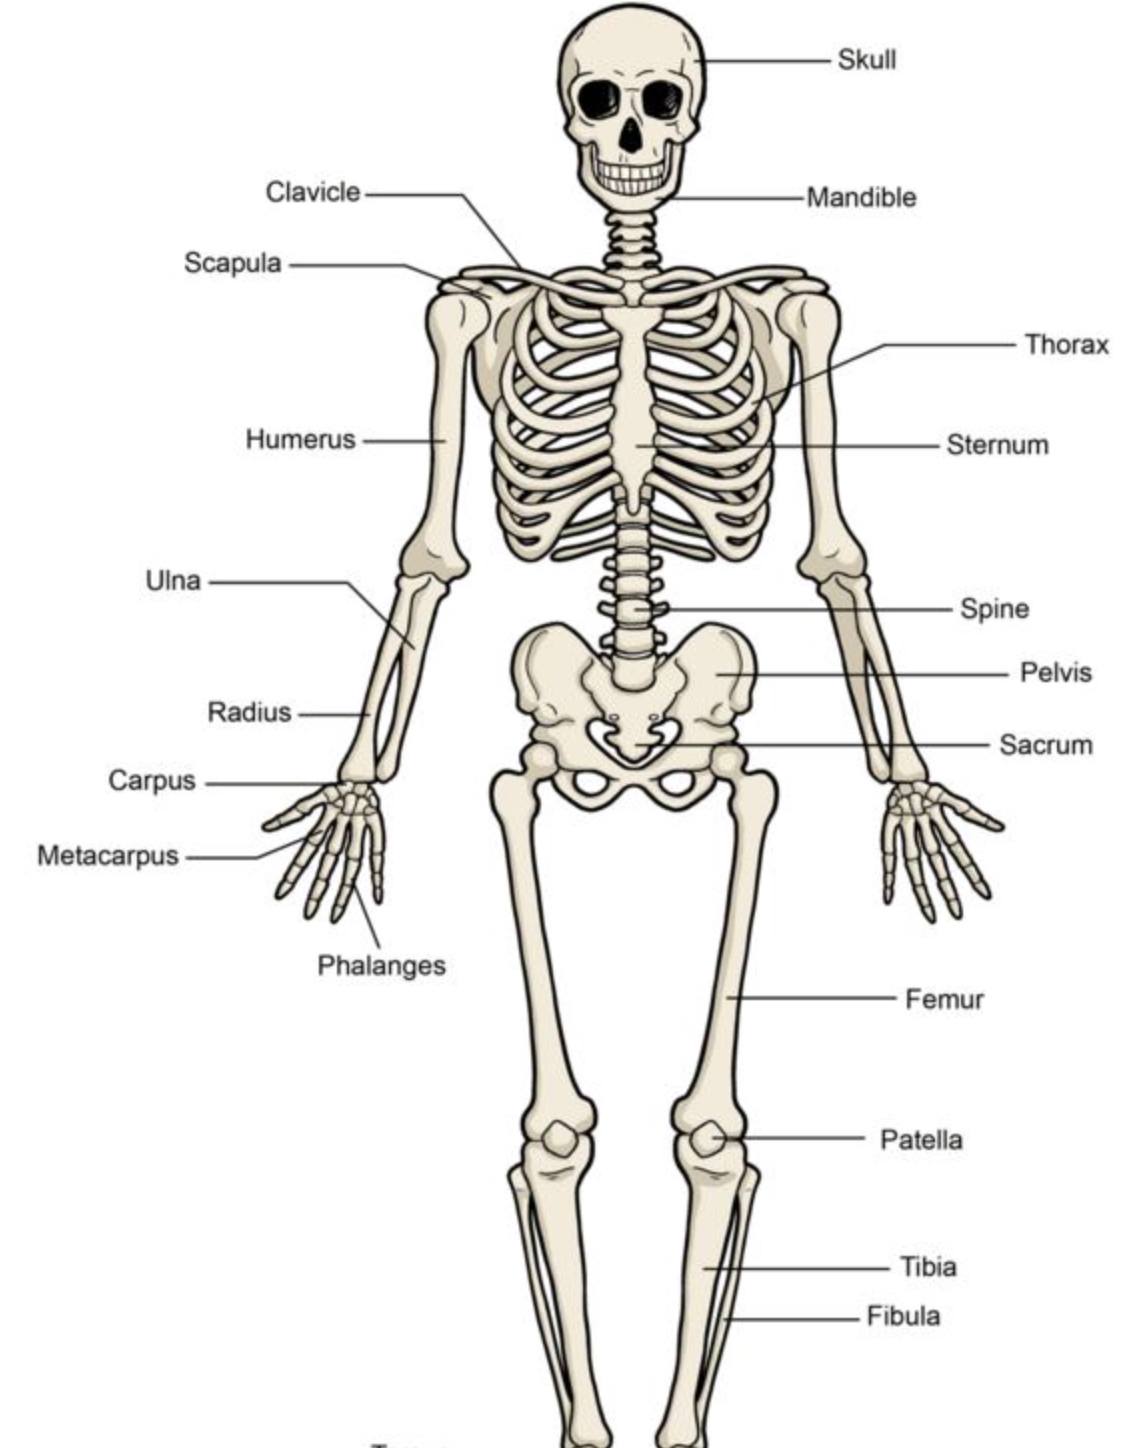 Skeletal system Biology Quiz Quizizz